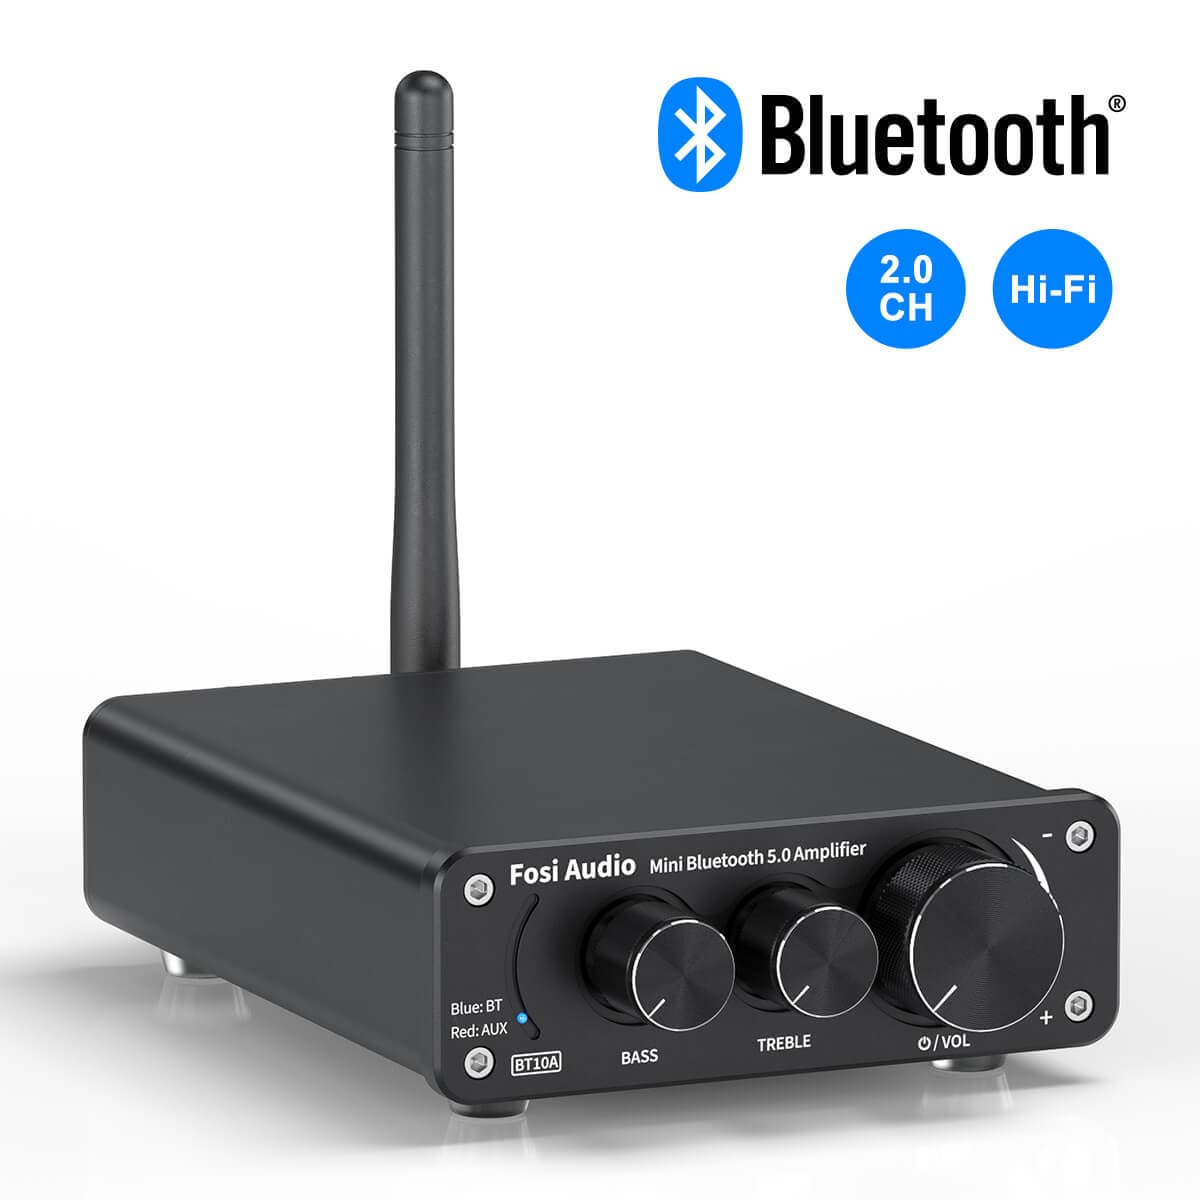 Bluetooth 5.0 Stereo Audio Amplifier Receiver 2CＨ 50W x 2 BT10A